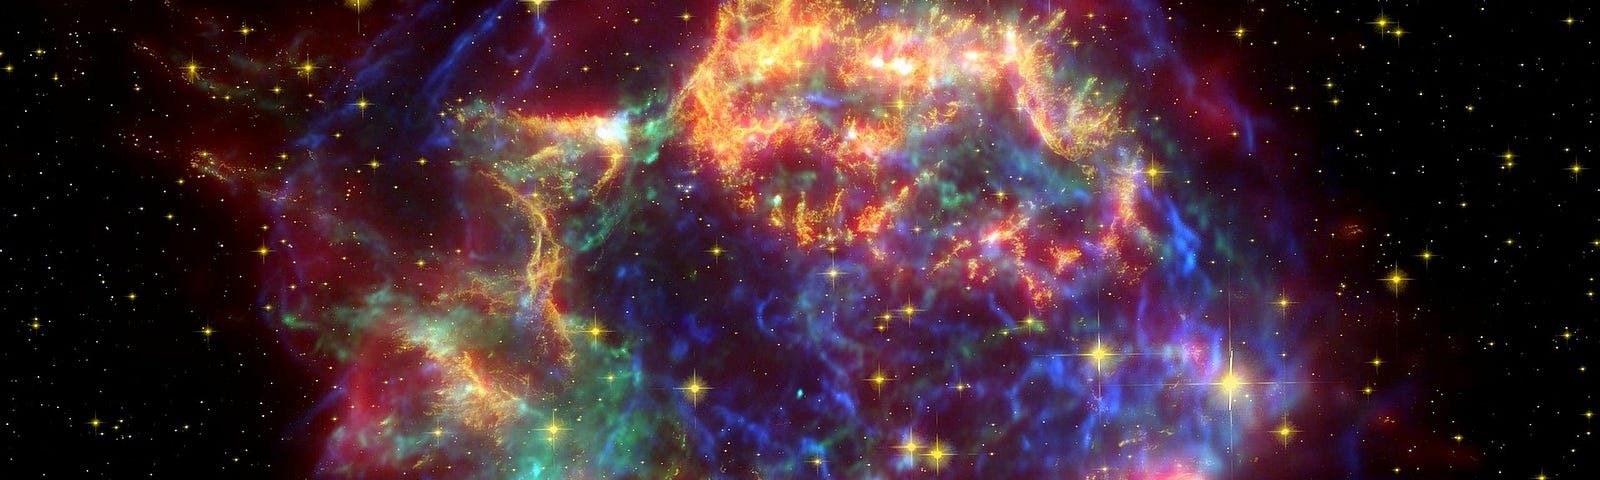 a multicolored explosion in space, cassiopeia